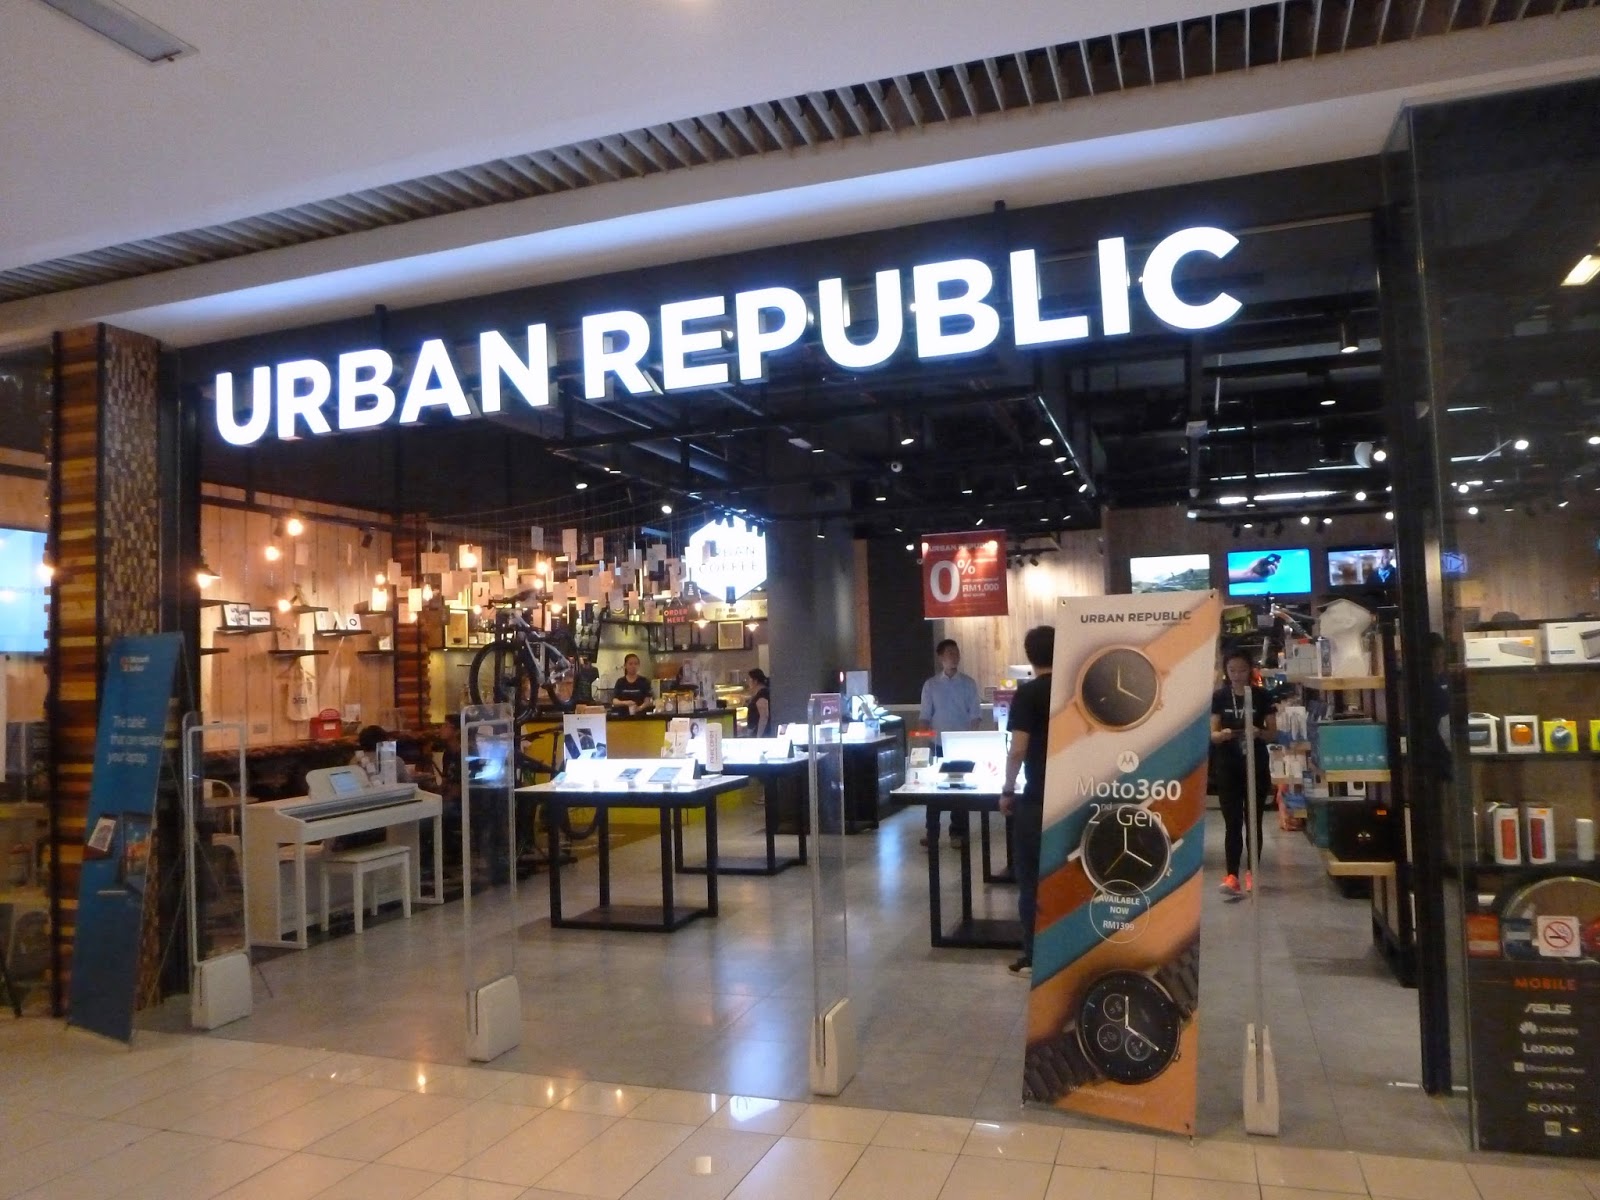 Urban Republic